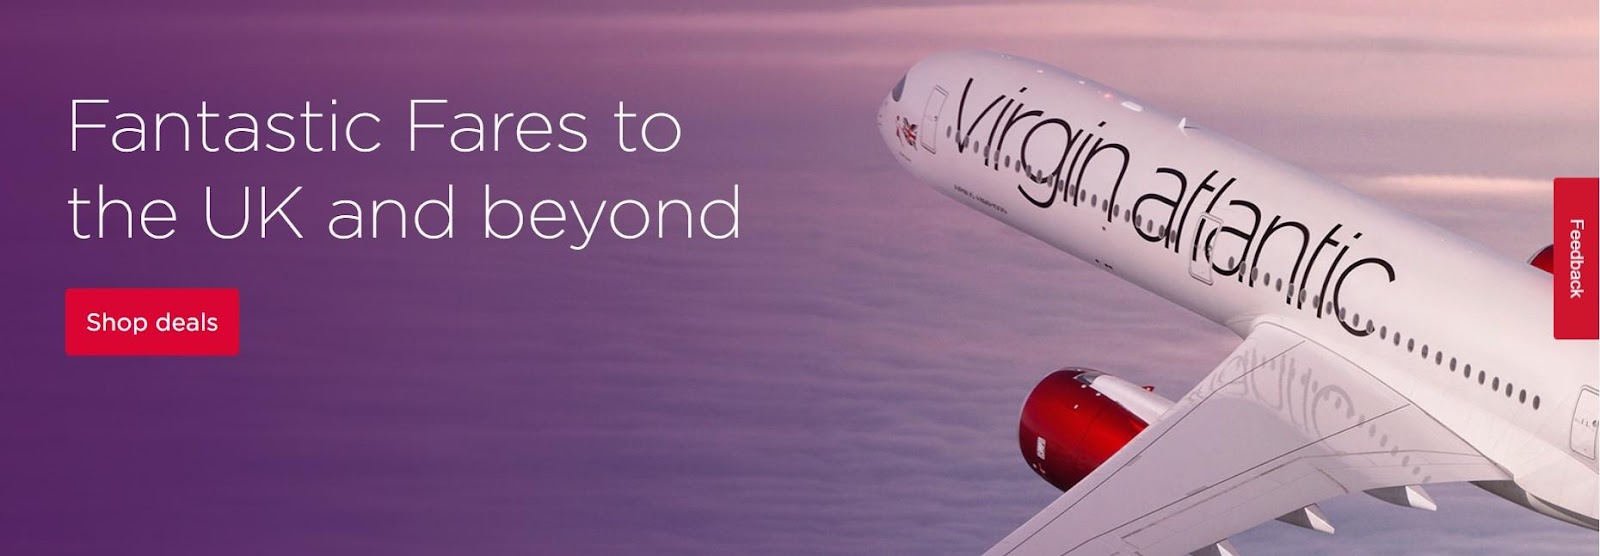 tell a story through your web banner design like Virgin Atlantic